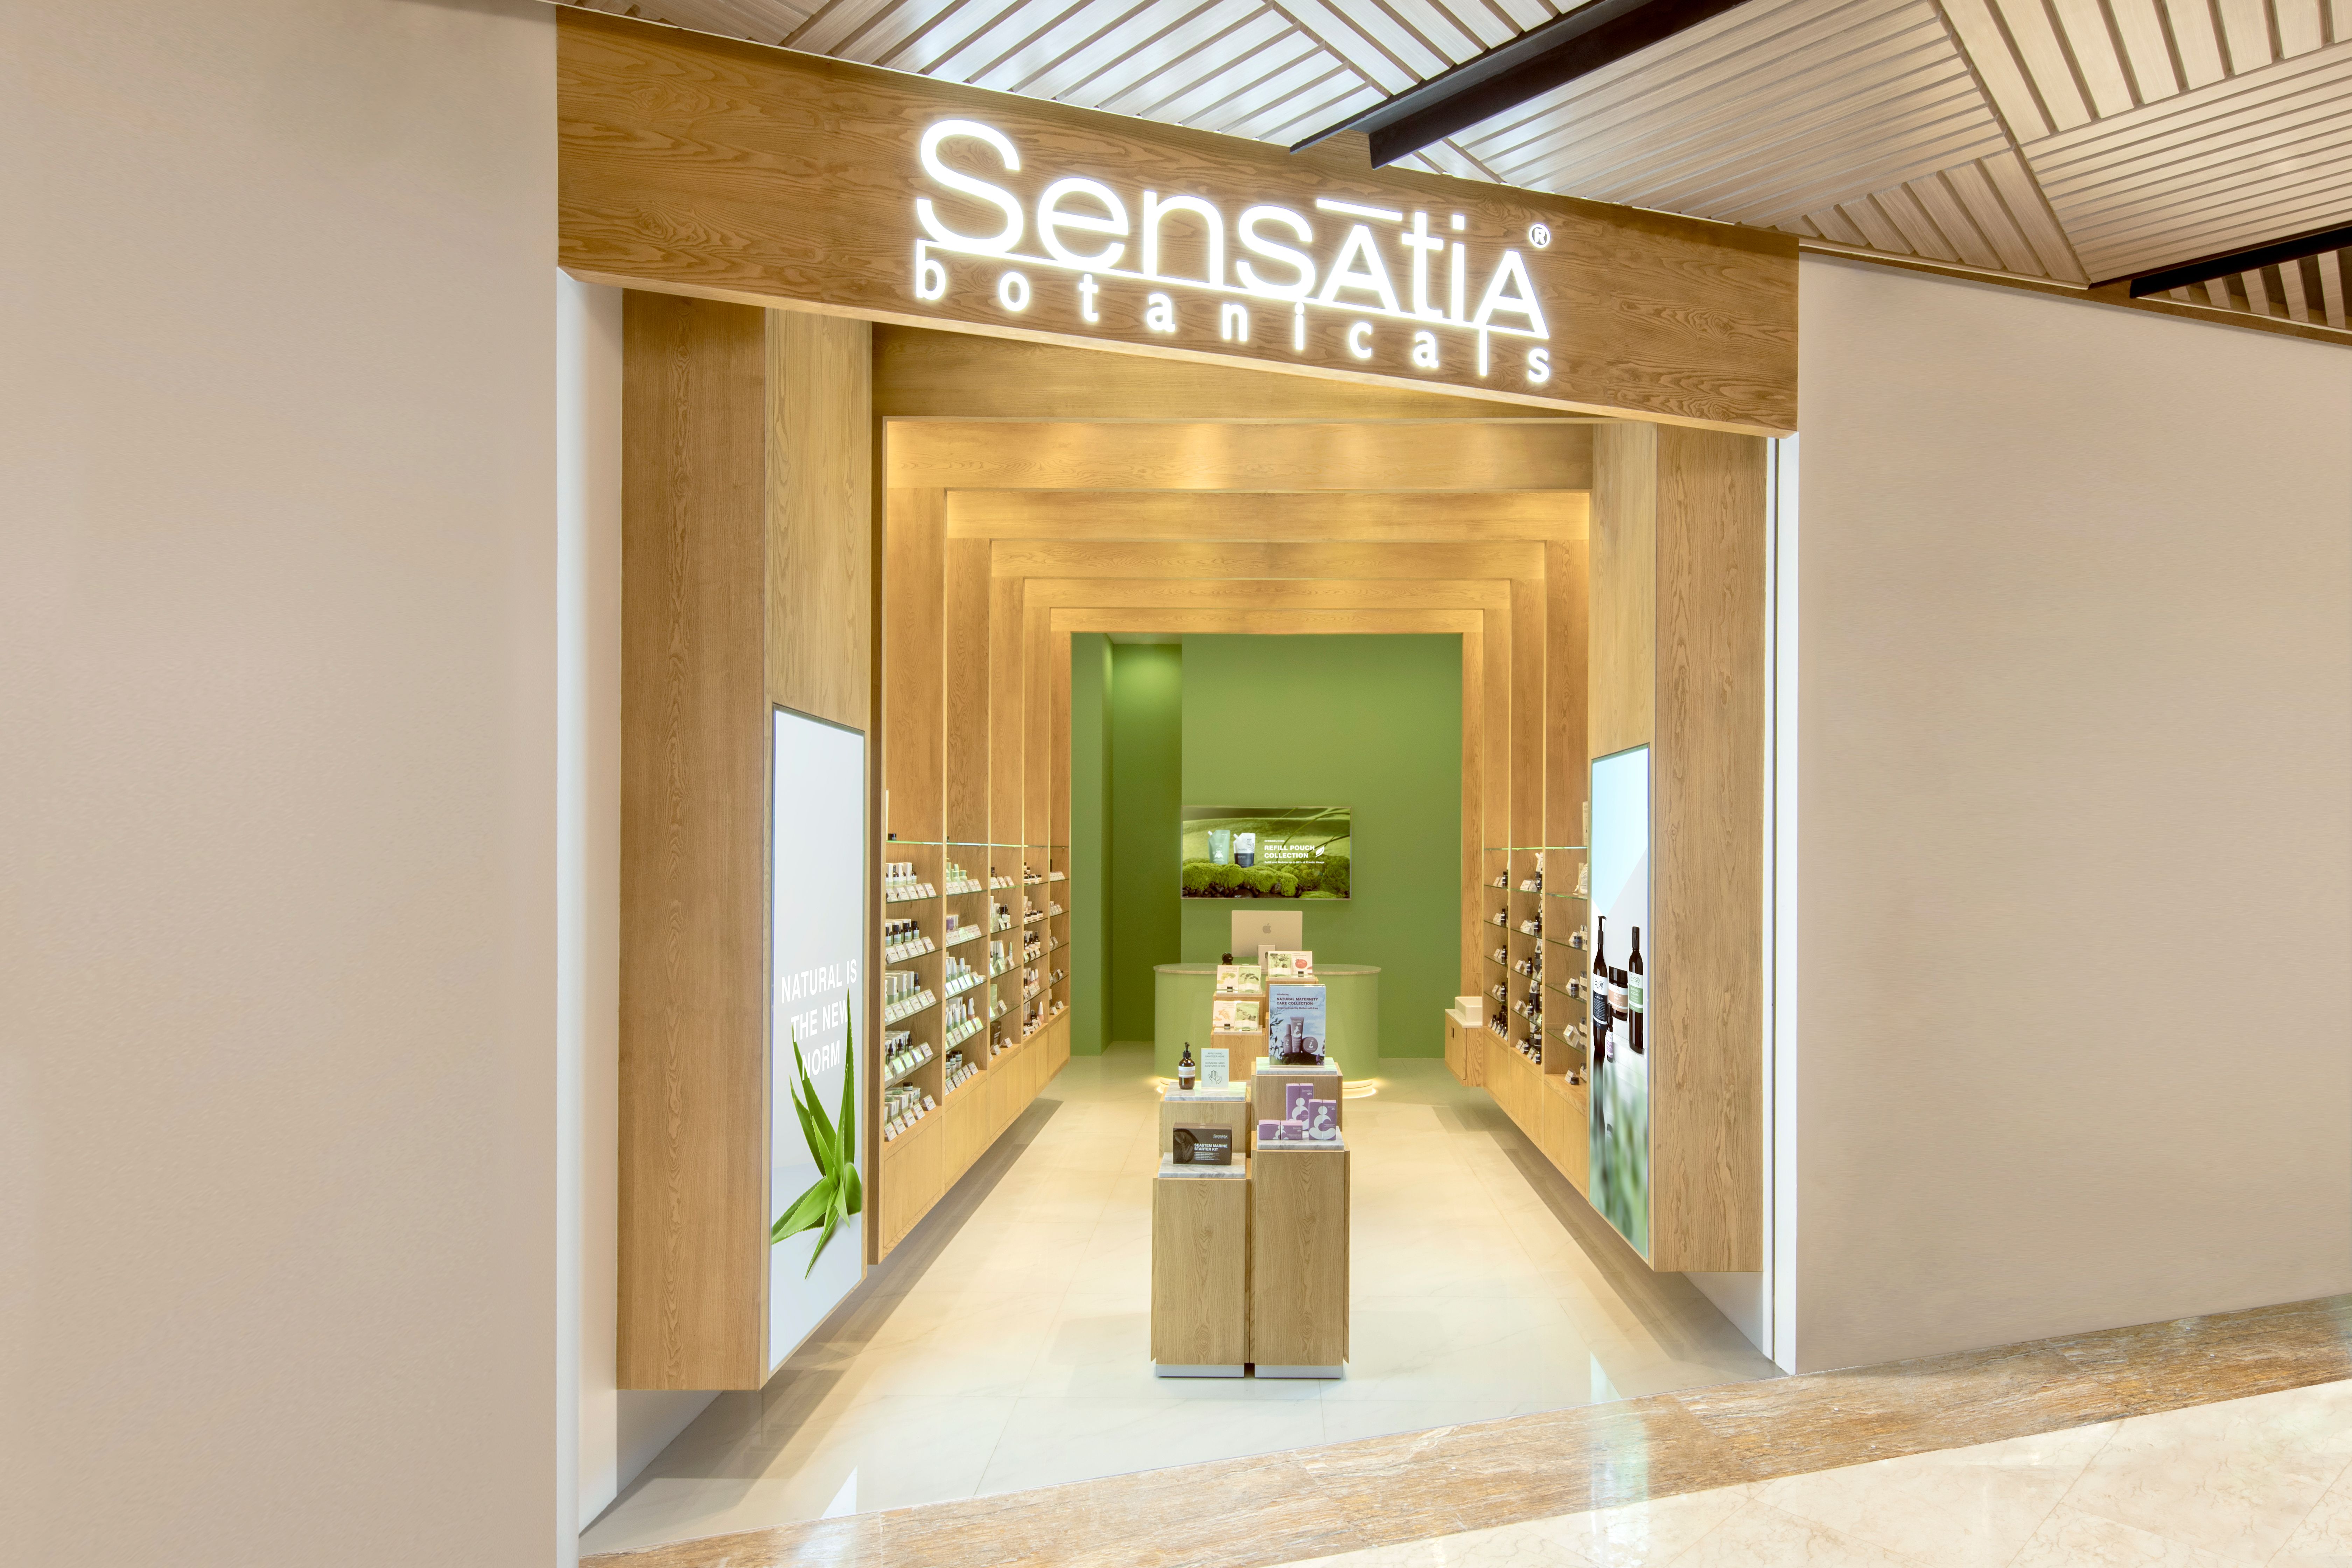 Sensatia Botanicals Opens Its First Store in Yogyakarta